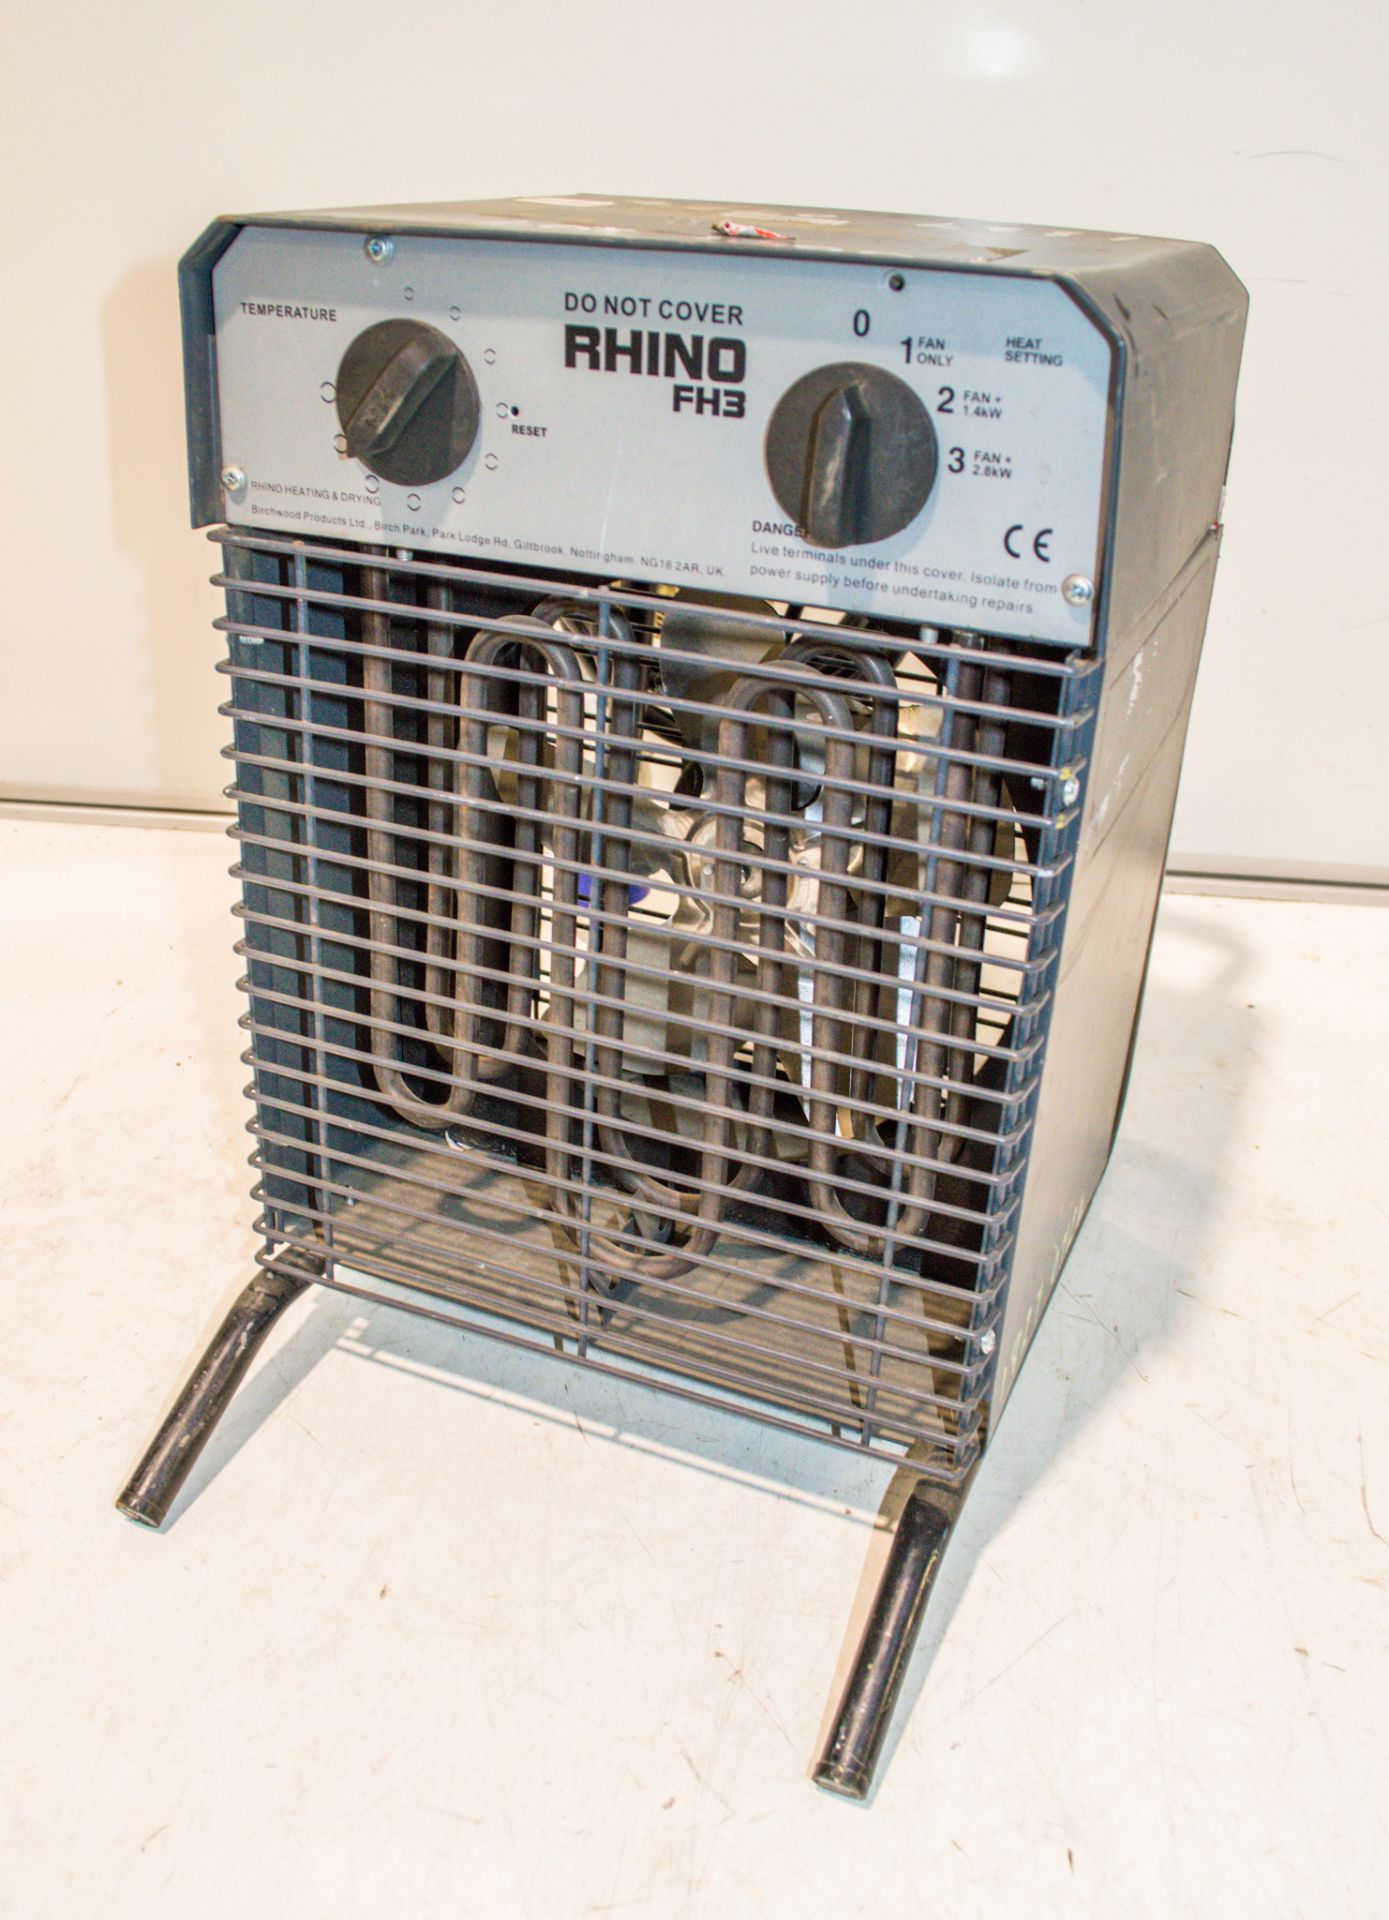 Rhino FH3 240v fan heater1827-0724